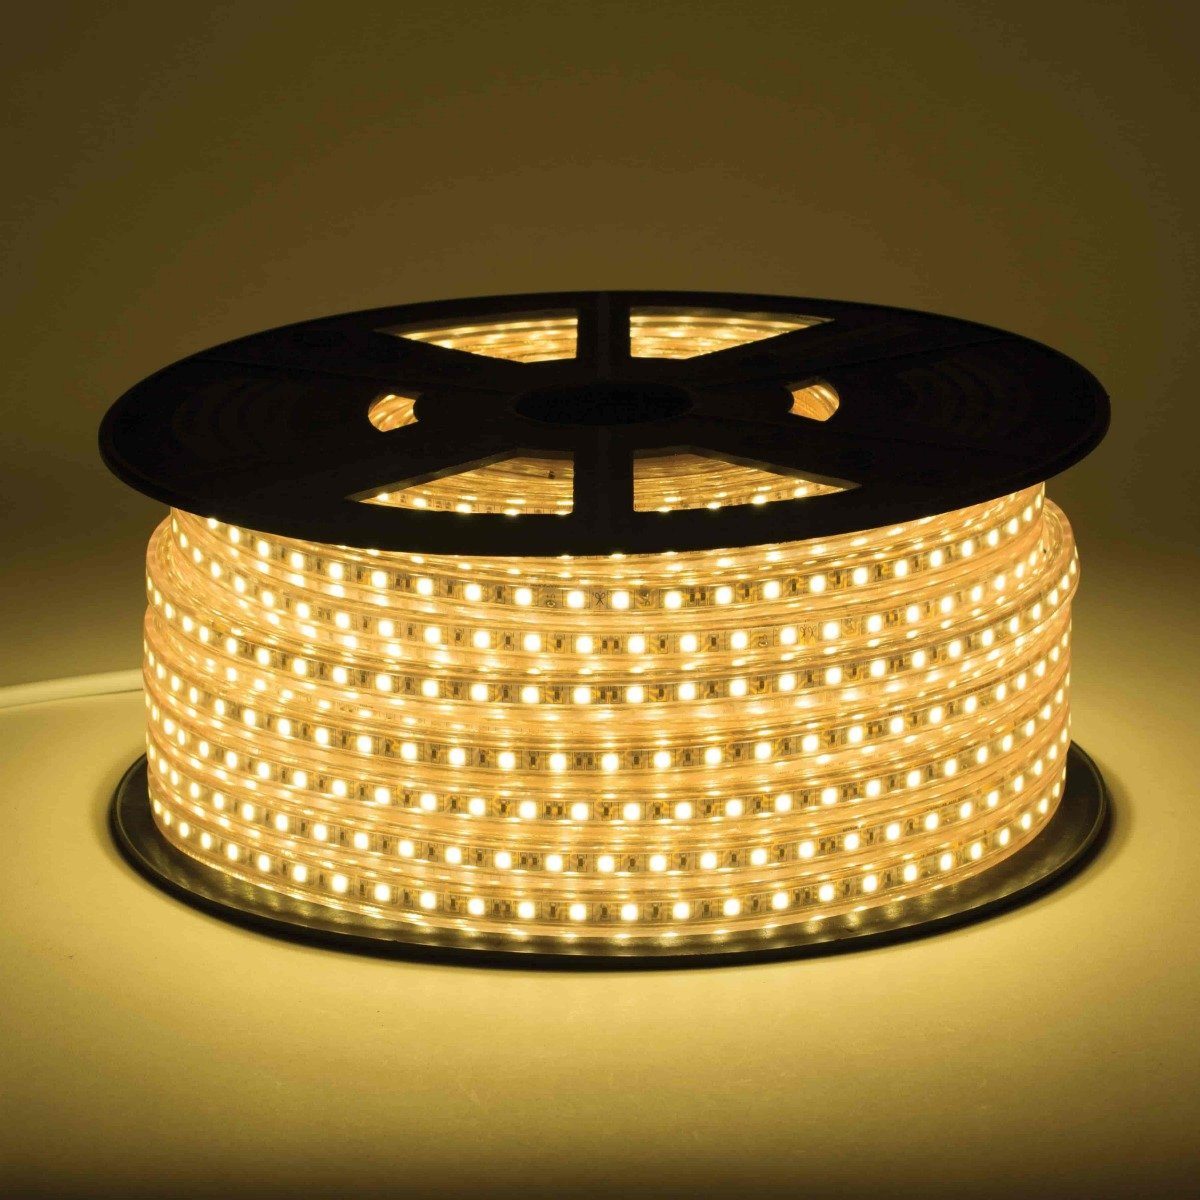 illuminated 120V led strip lights reel with visible chips in white 2700K